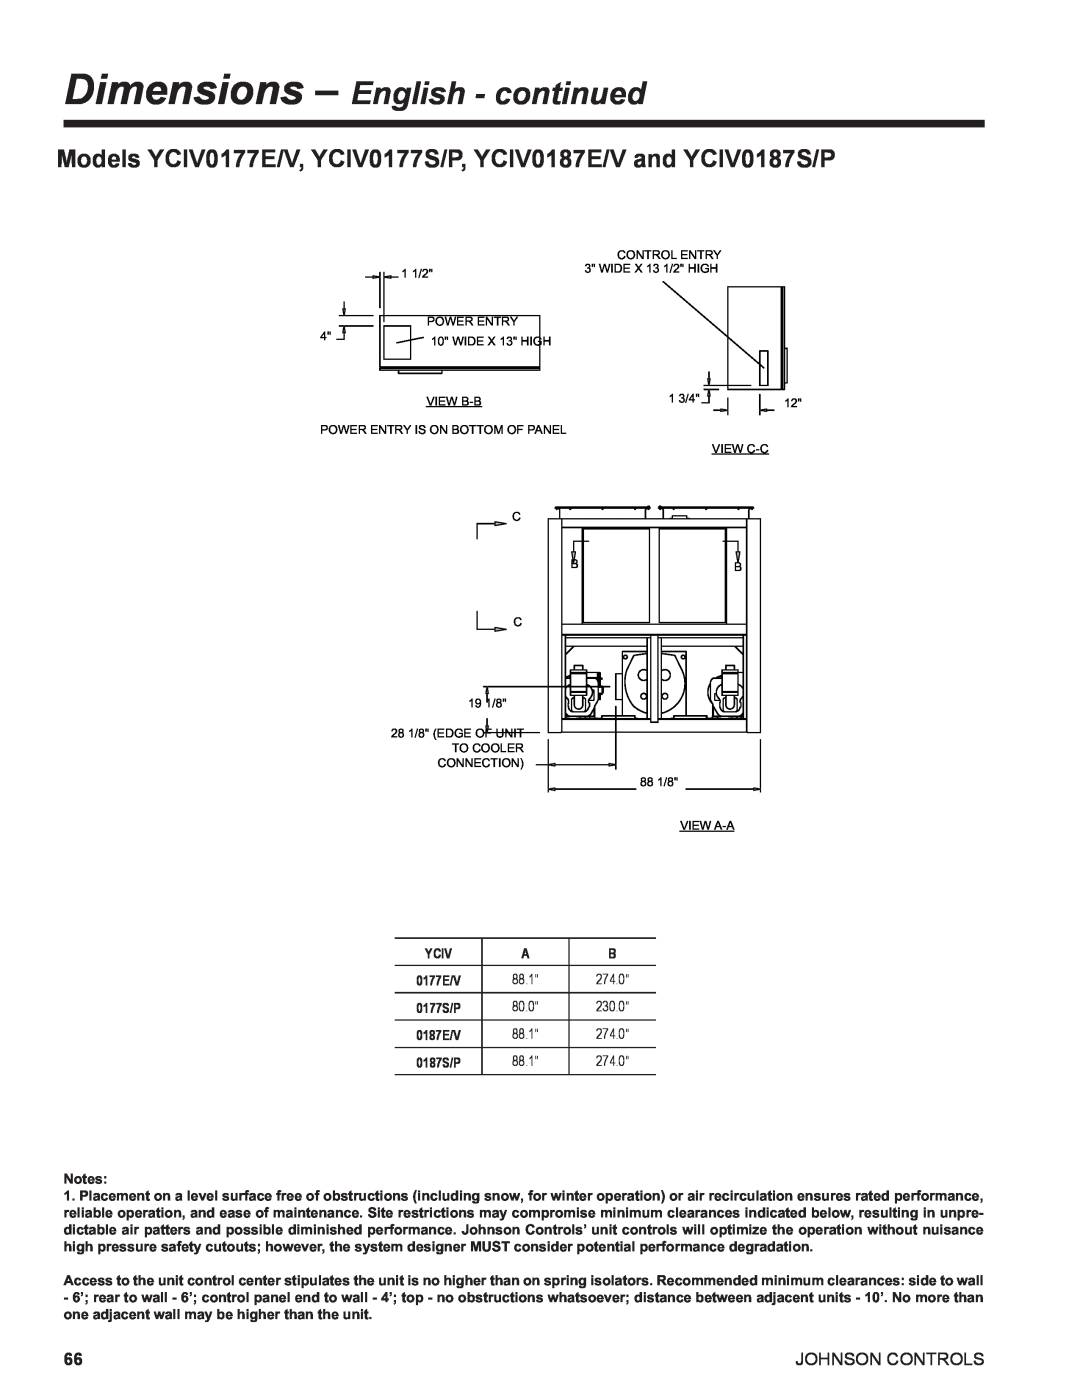 York R134A manual Dimensions – English - continued, Johnson Controls 